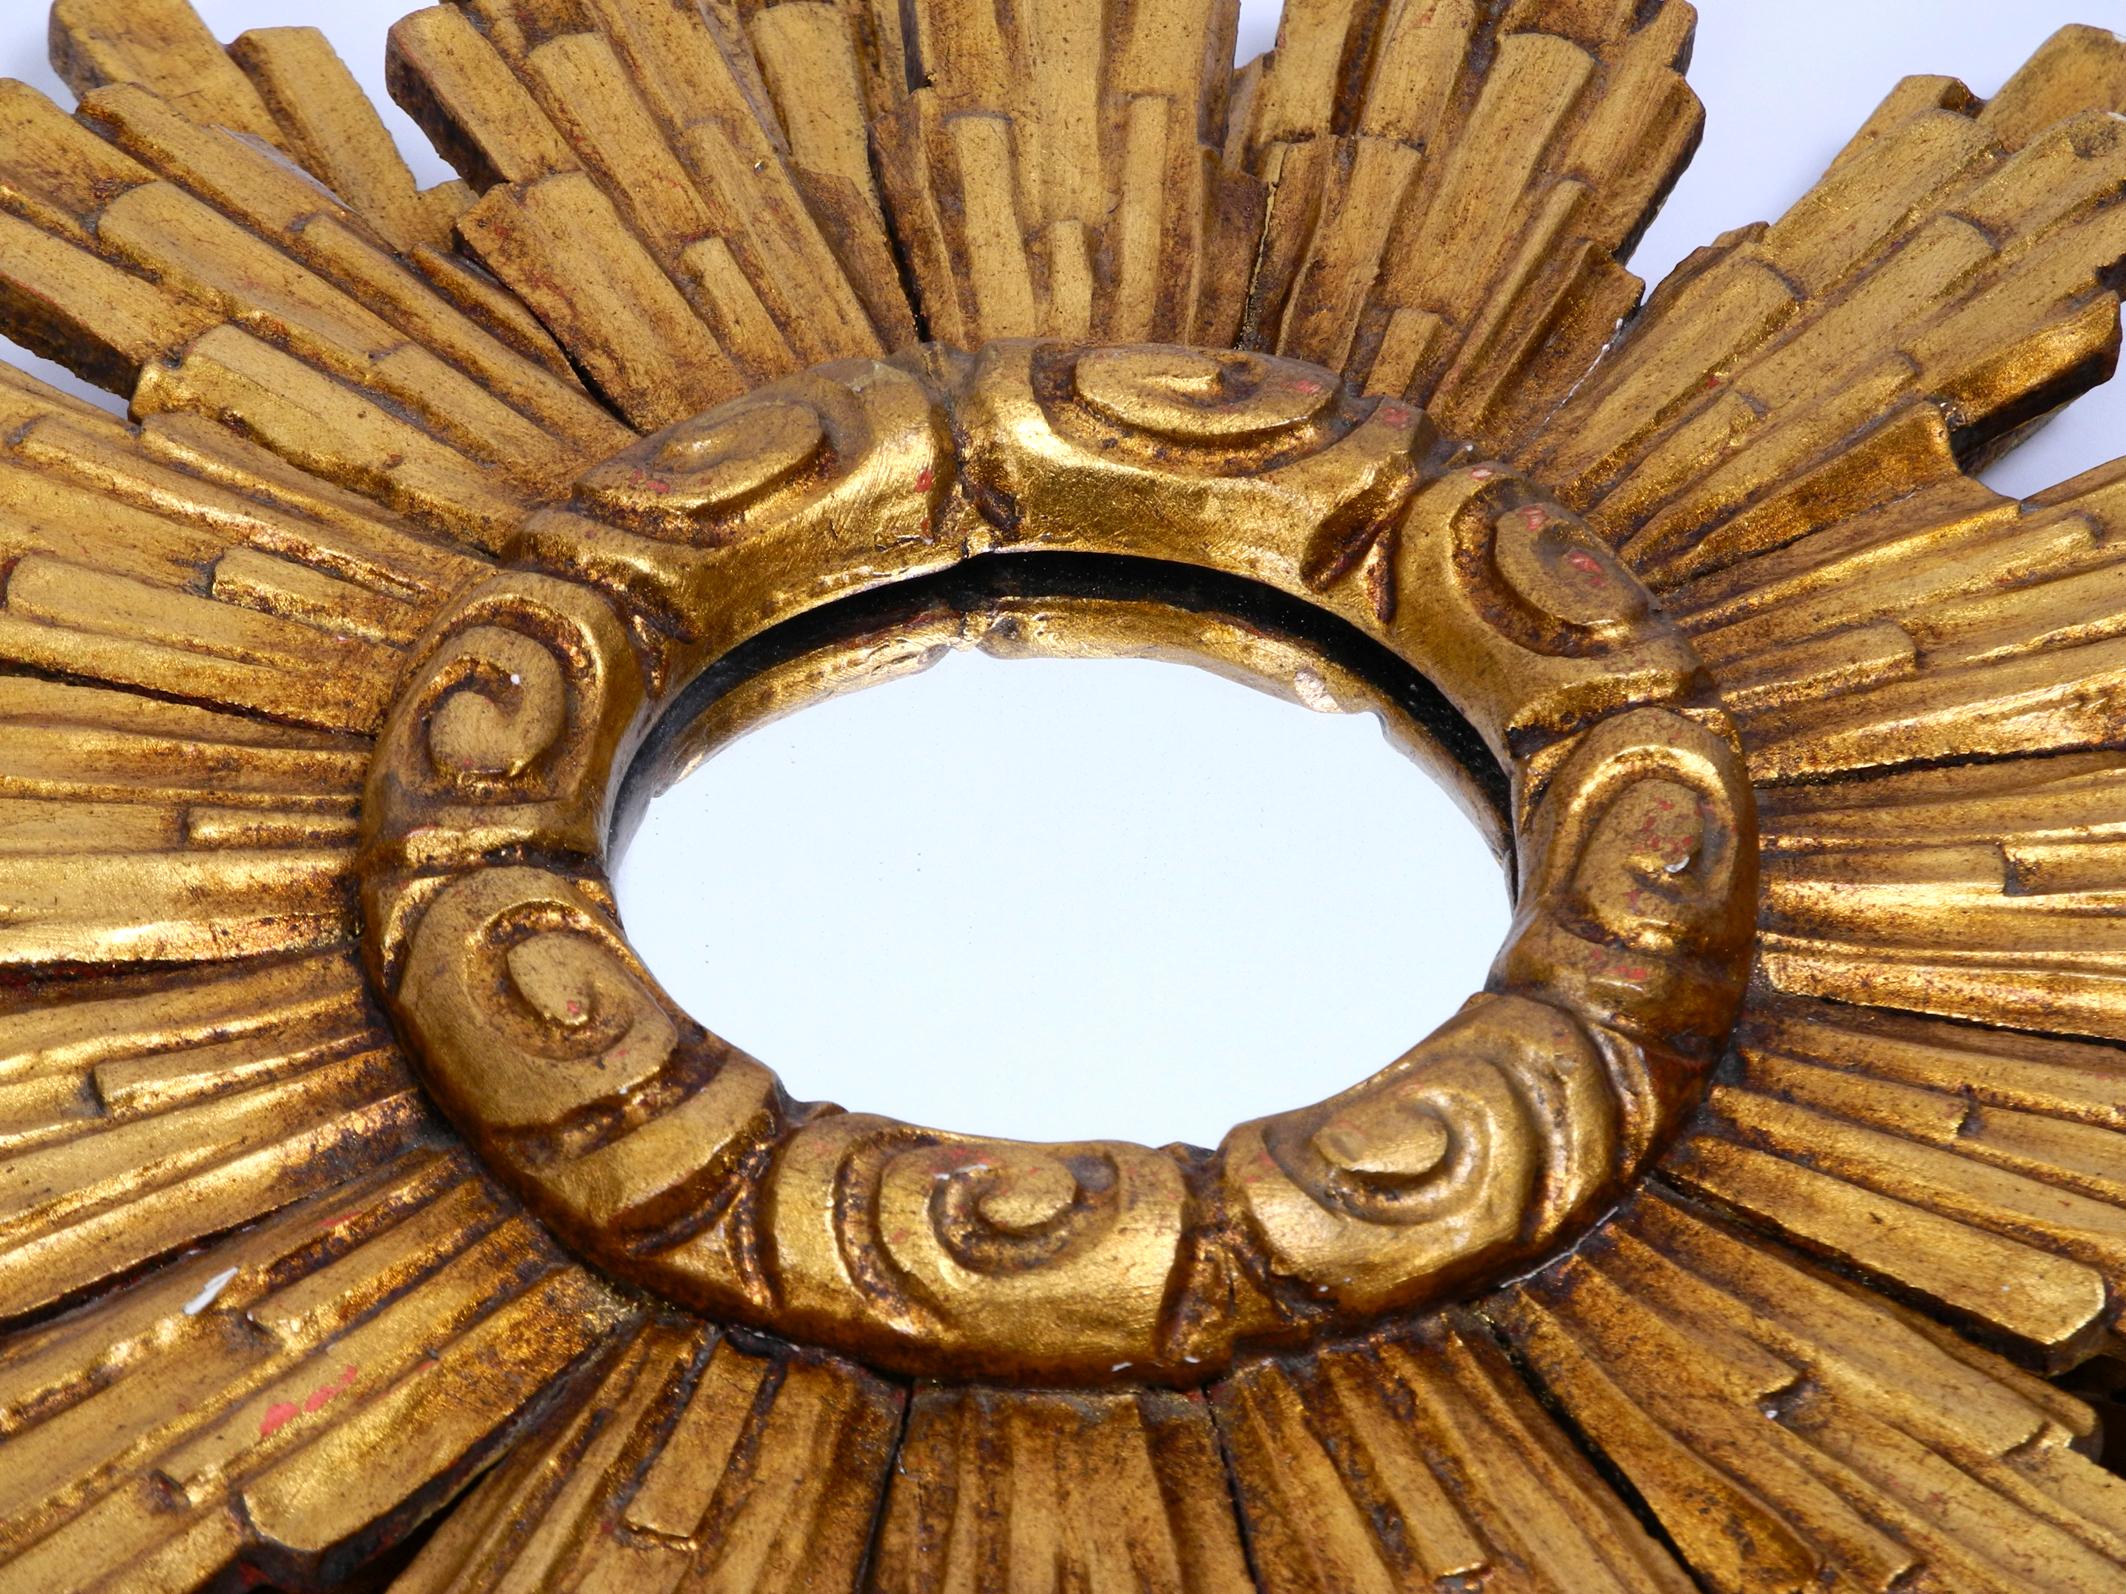 Large Illuminated Midcentury Sunburst Wall Mirror Made of Gold-Plated Wood 1